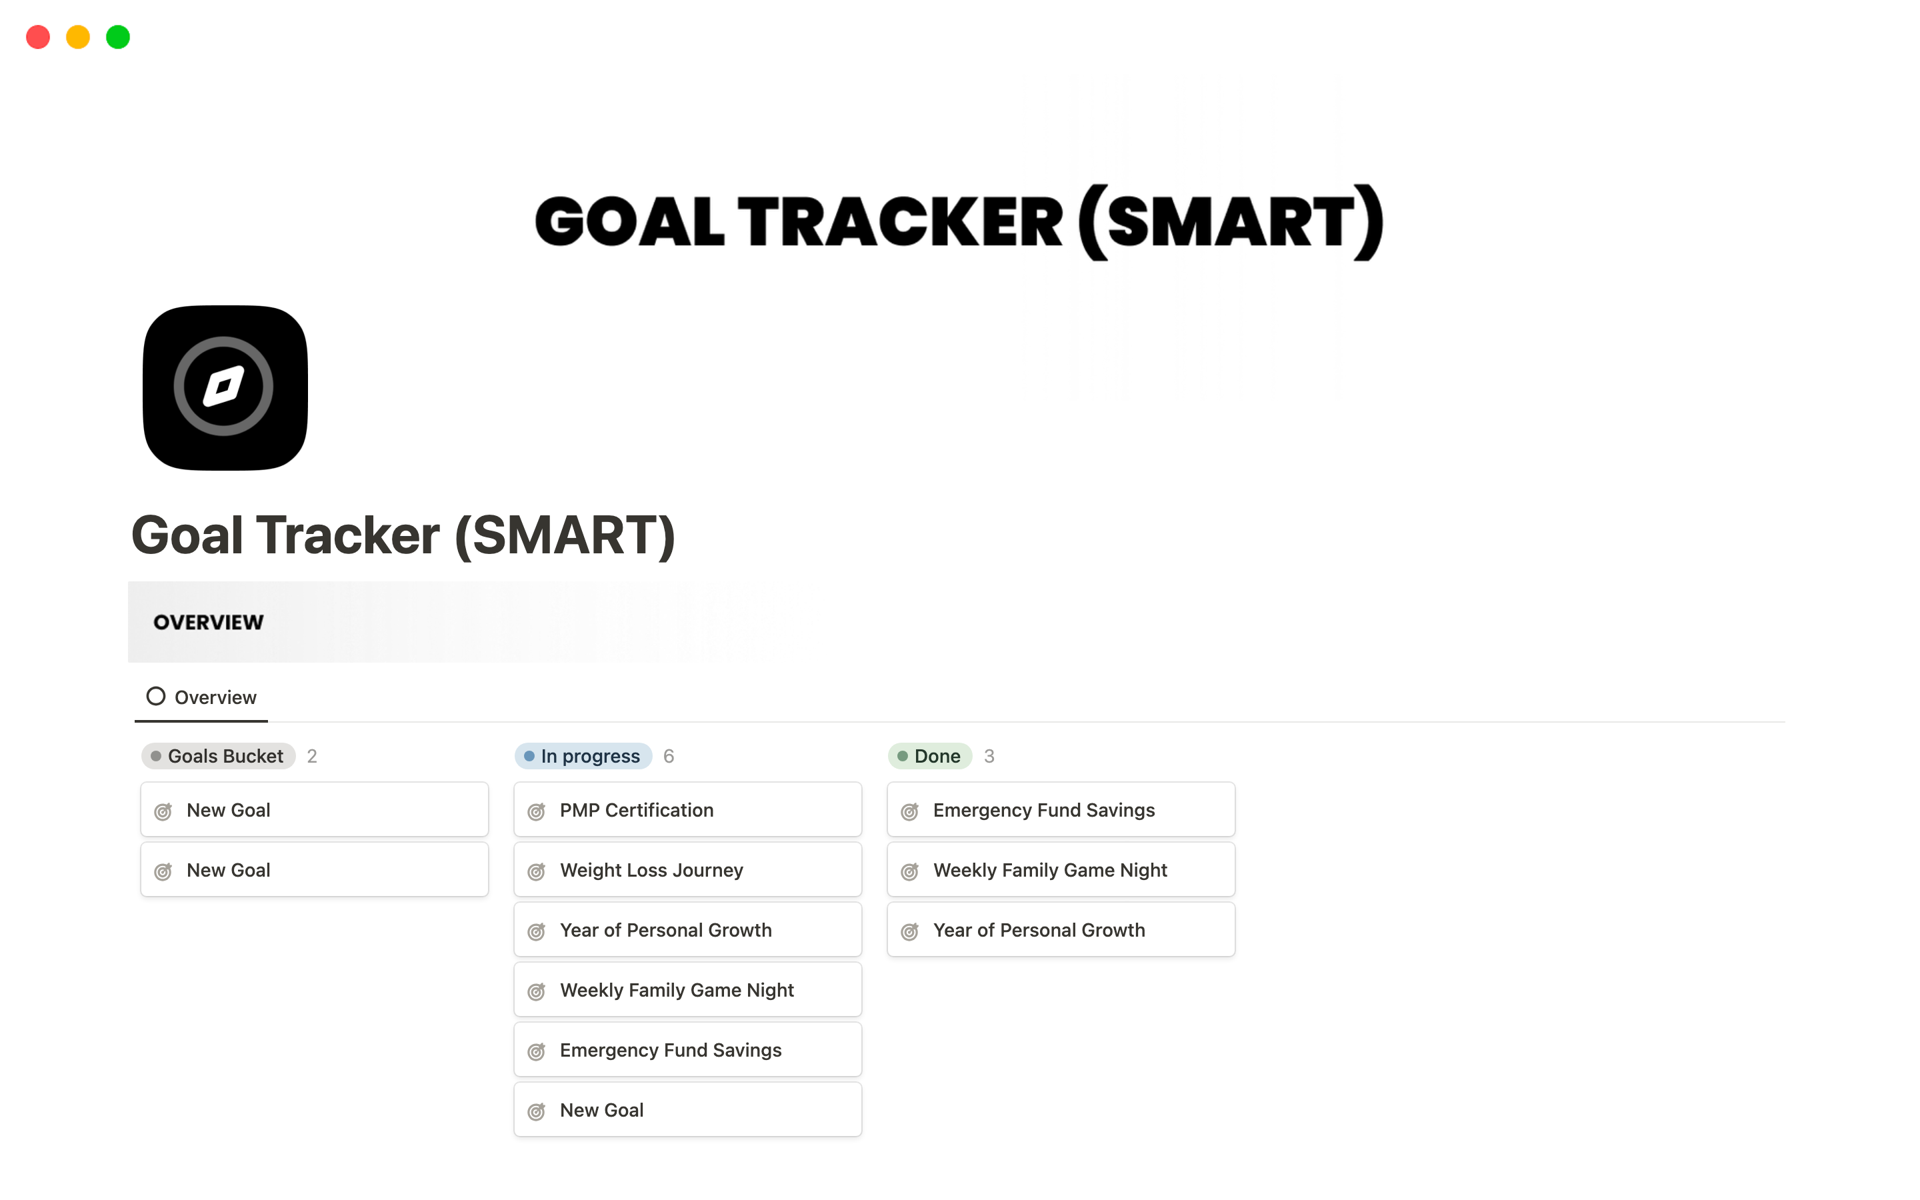 Vista previa de plantilla para SMART Goal Tracker